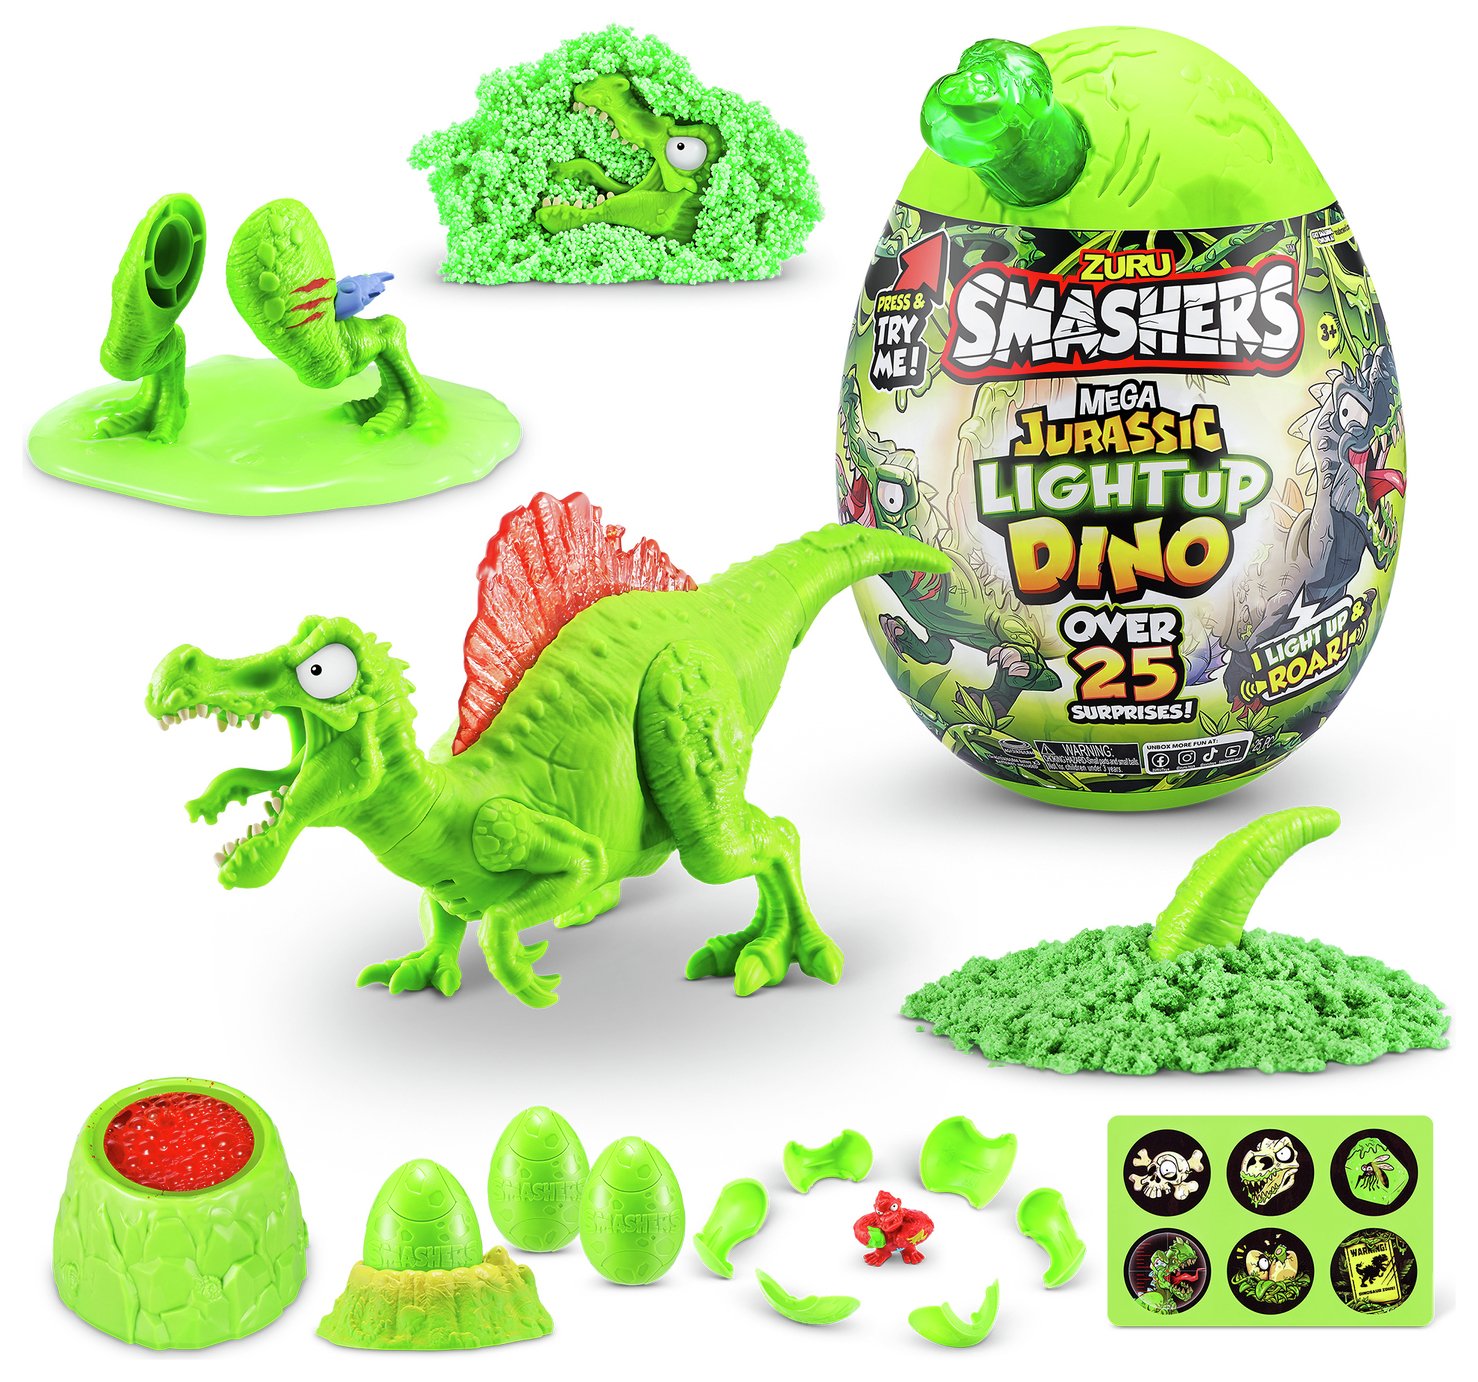 Zuru Smashers Jurassic S1 Mega Light-up Dino Playset